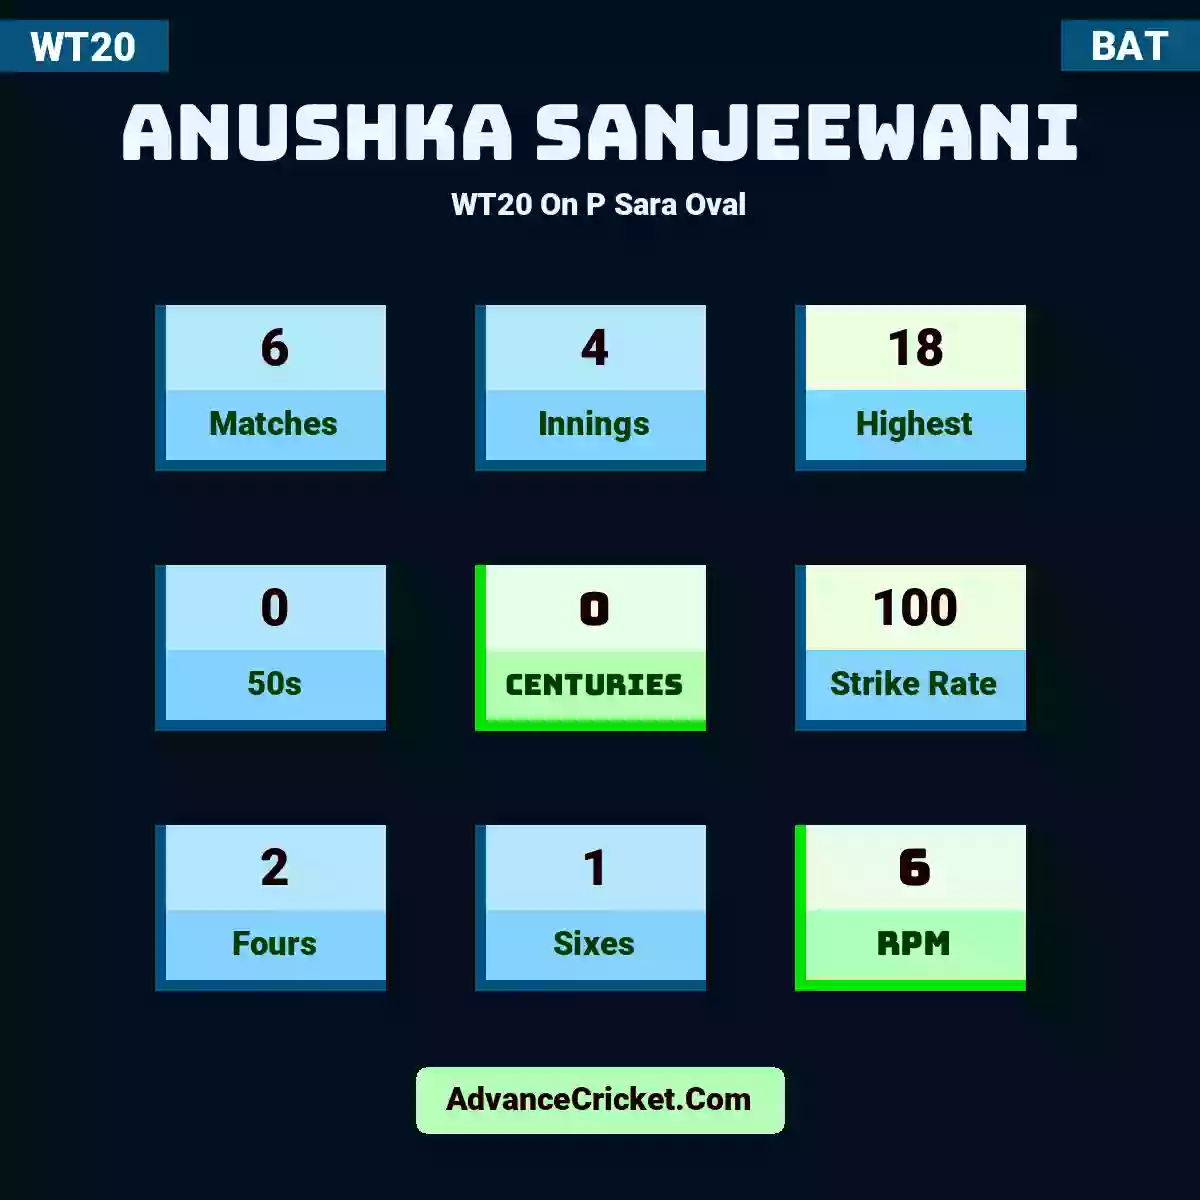 Anushka Sanjeewani WT20  On P Sara Oval, Anushka Sanjeewani played 6 matches, scored 18 runs as highest, 0 half-centuries, and 0 centuries, with a strike rate of 100. A.Sanjeewani hit 2 fours and 1 sixes, with an RPM of 6.